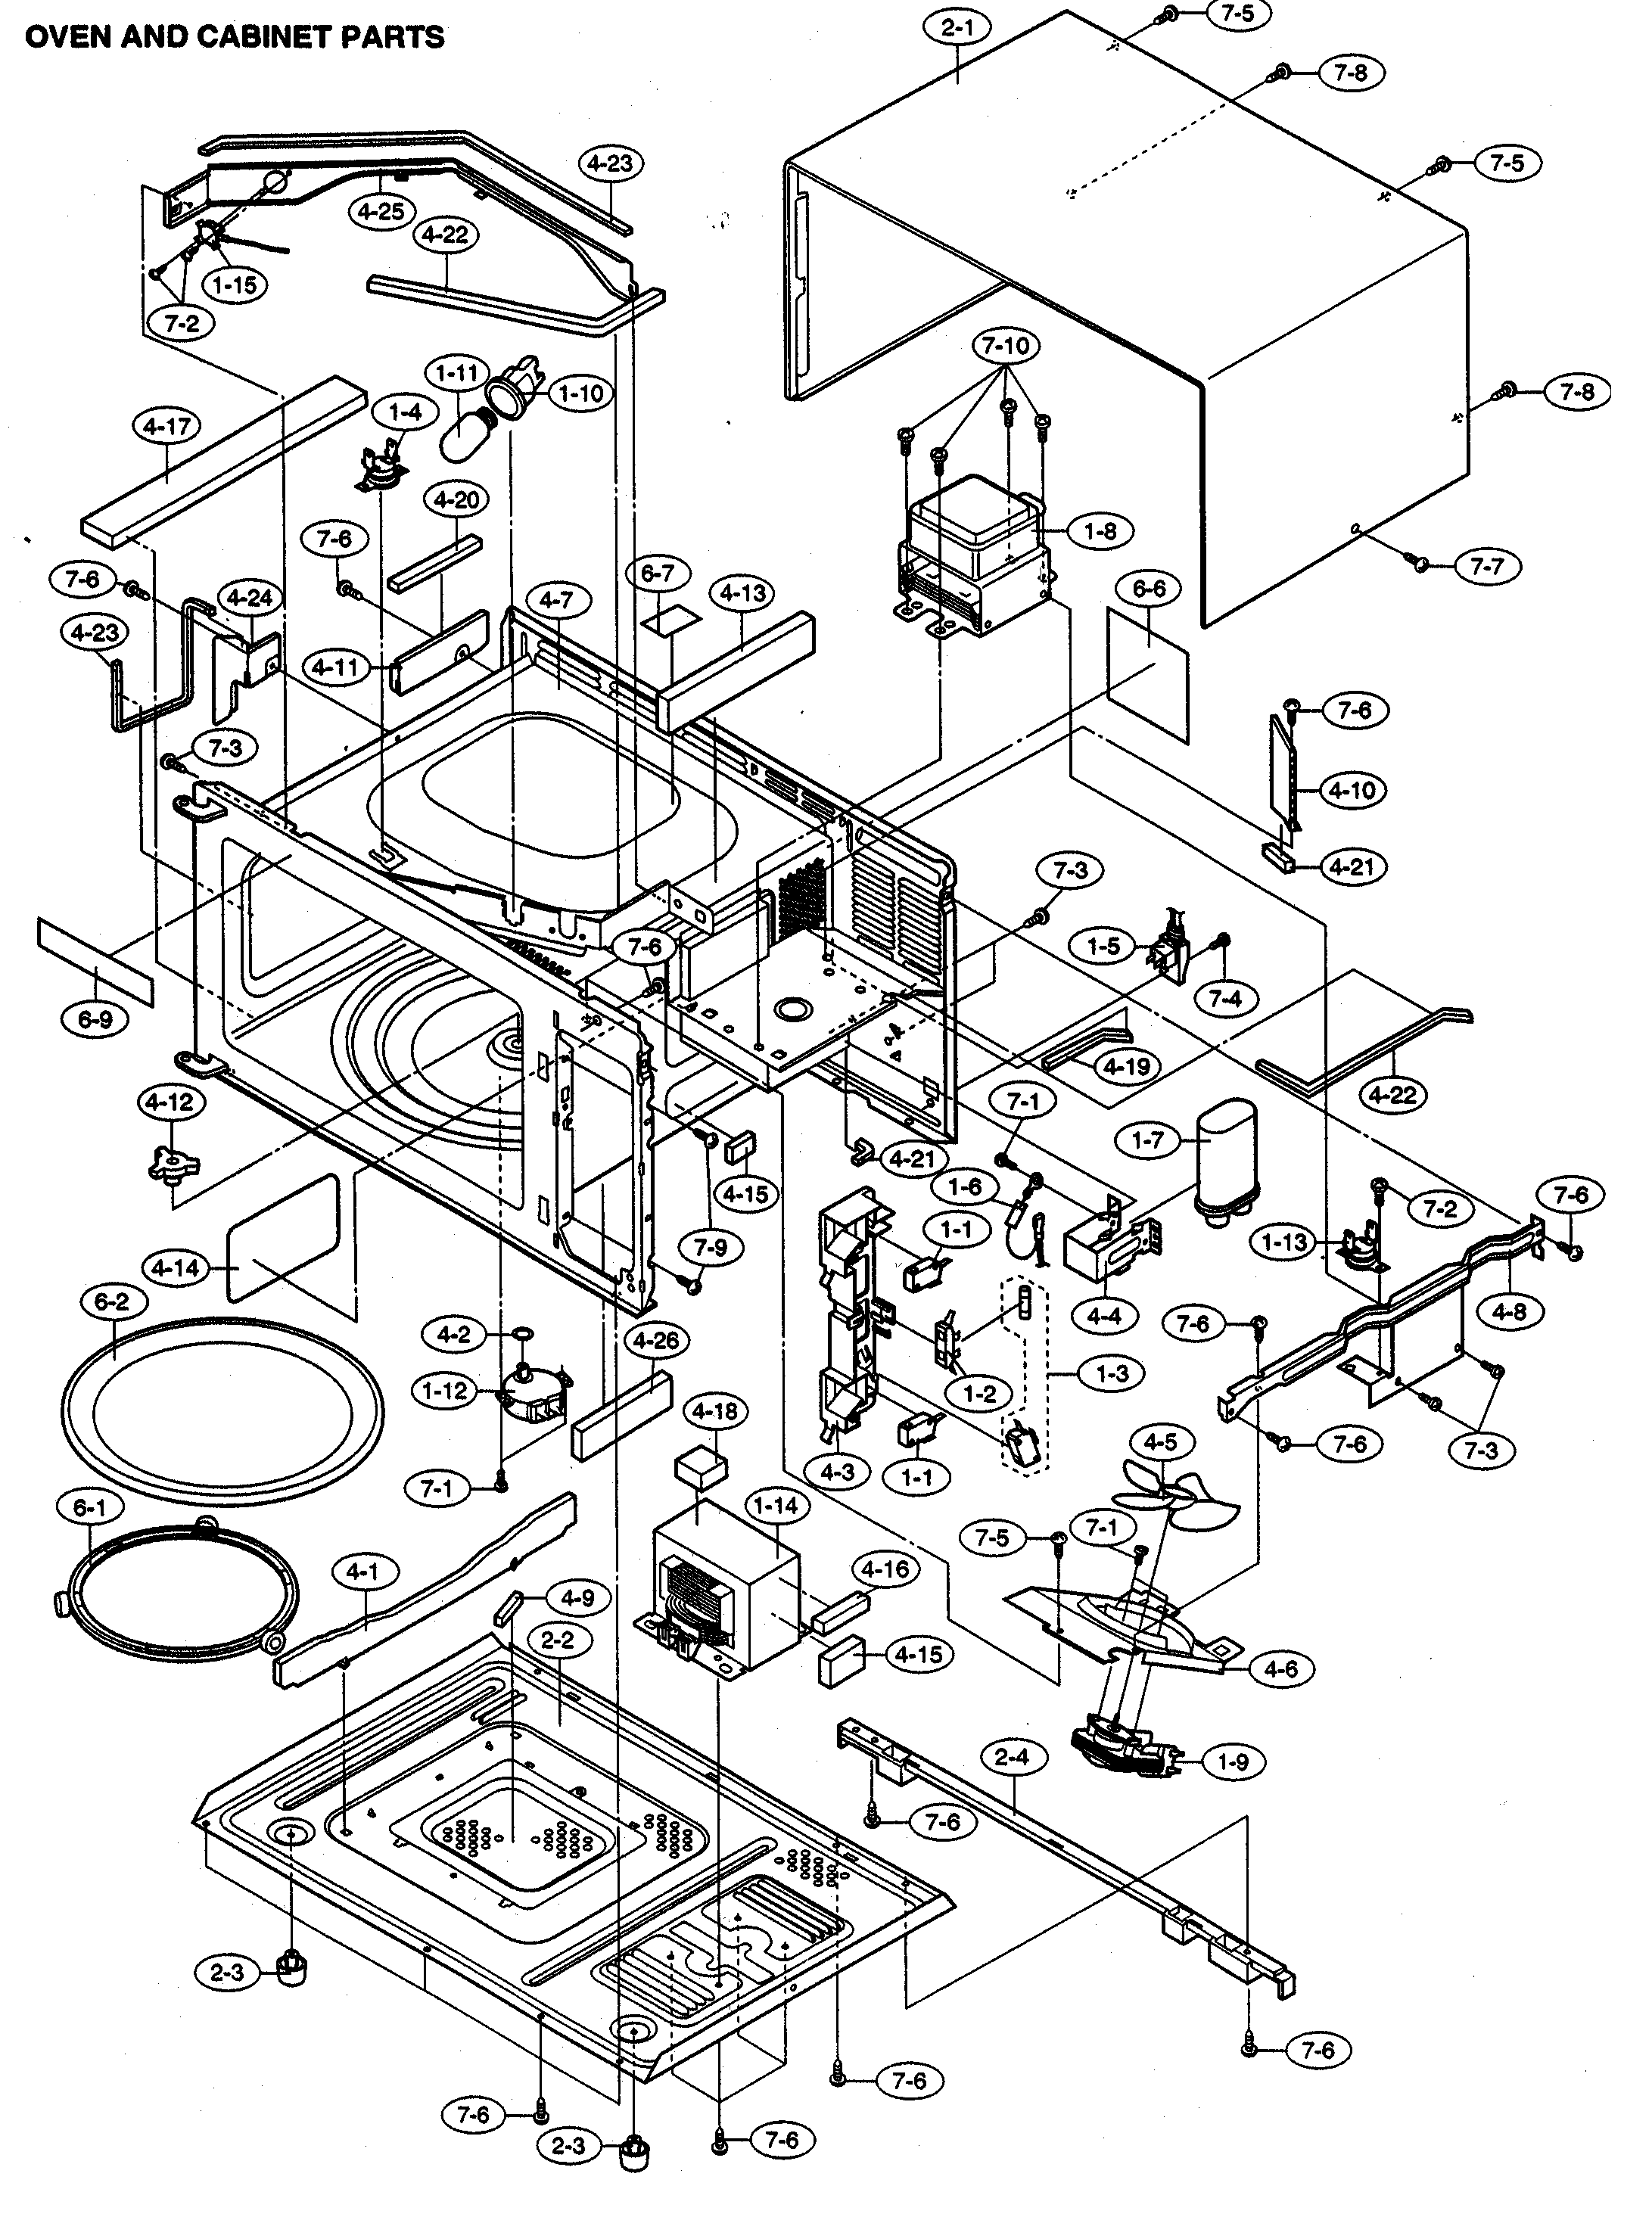 31 Sharp Microwave Parts Diagram